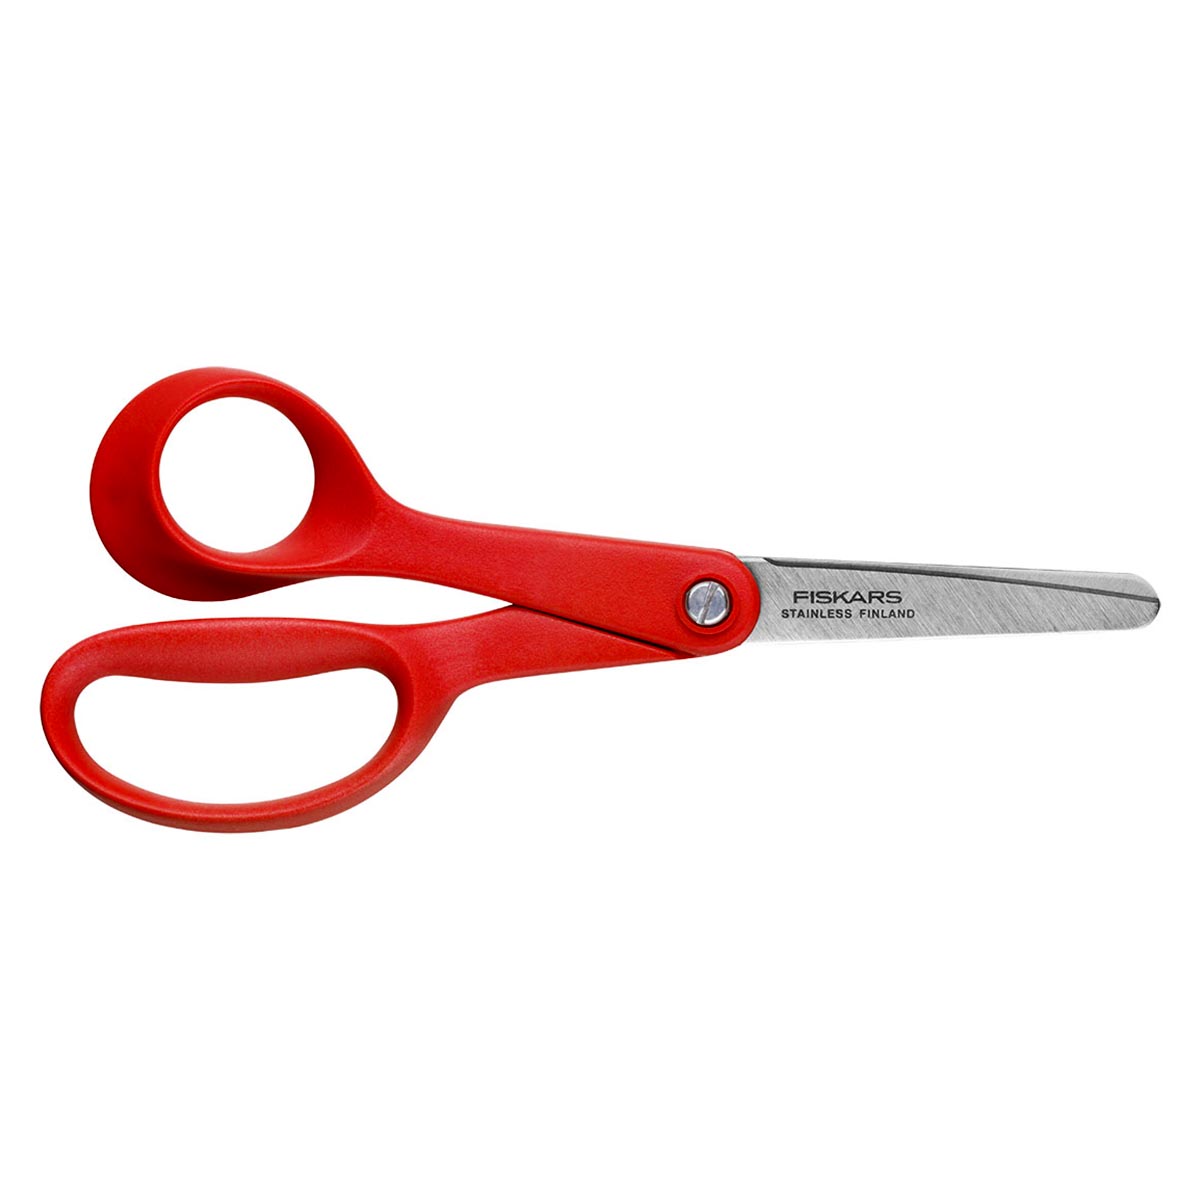 https://www.williamgee.co.uk/wp-content/uploads/2015/12/Fiskars-Classic-Childrens-Left-Handed-Scissors-F9993-out-pack.jpg